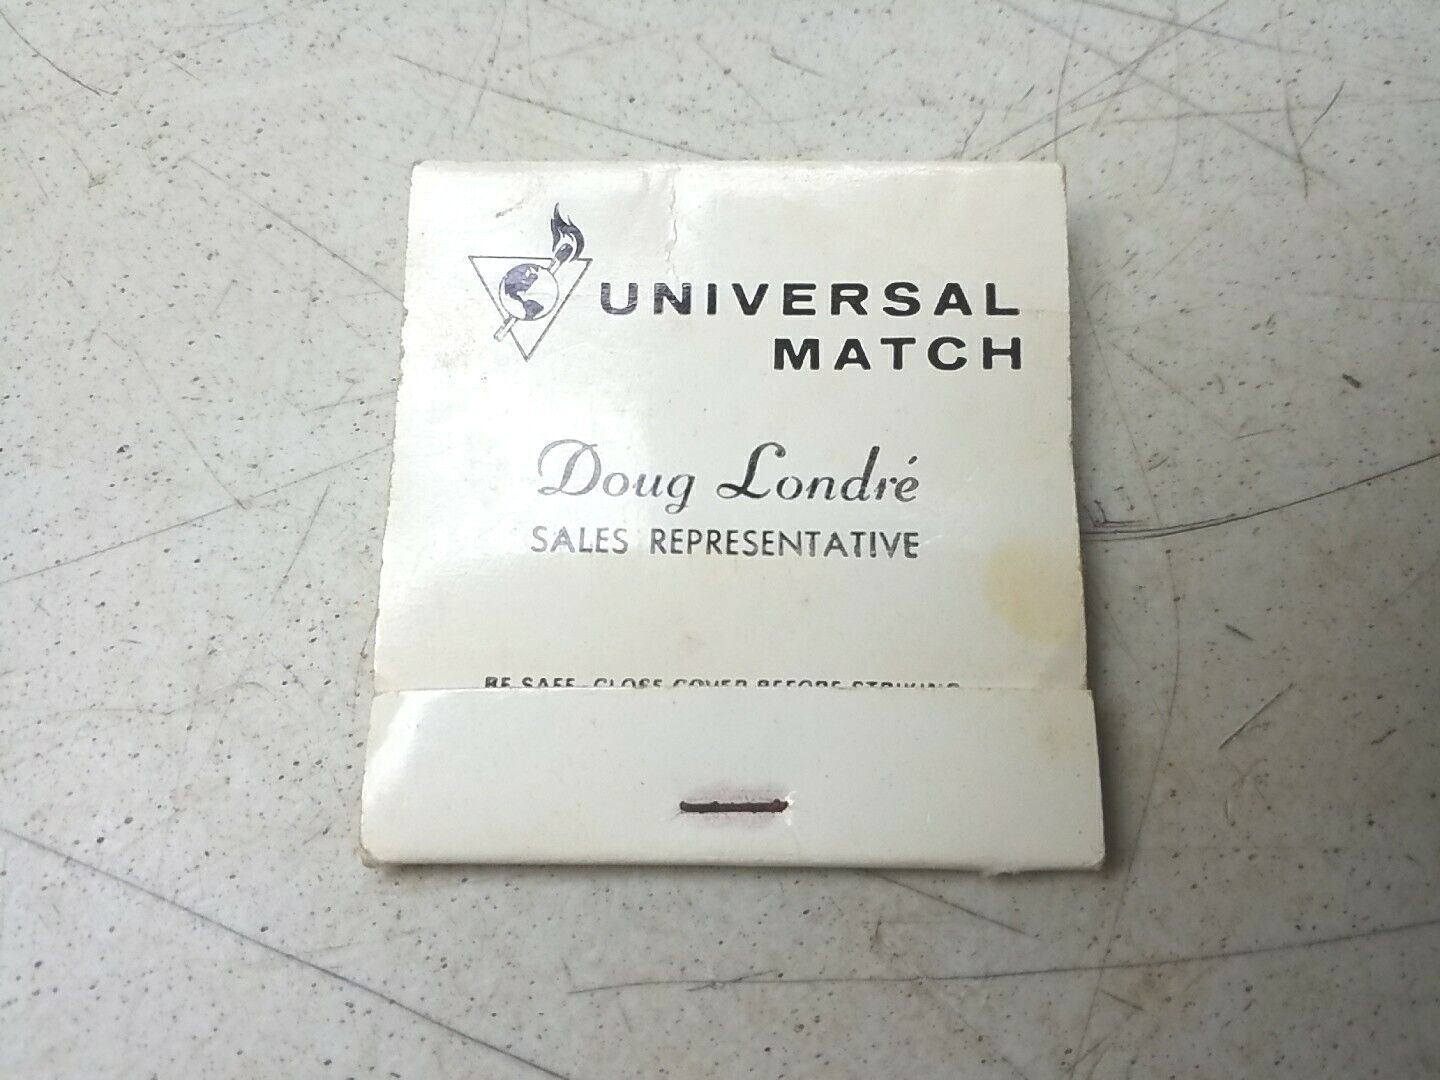 Universal Match Doug Londre UMC Industries Vintage Matchbook Cover 